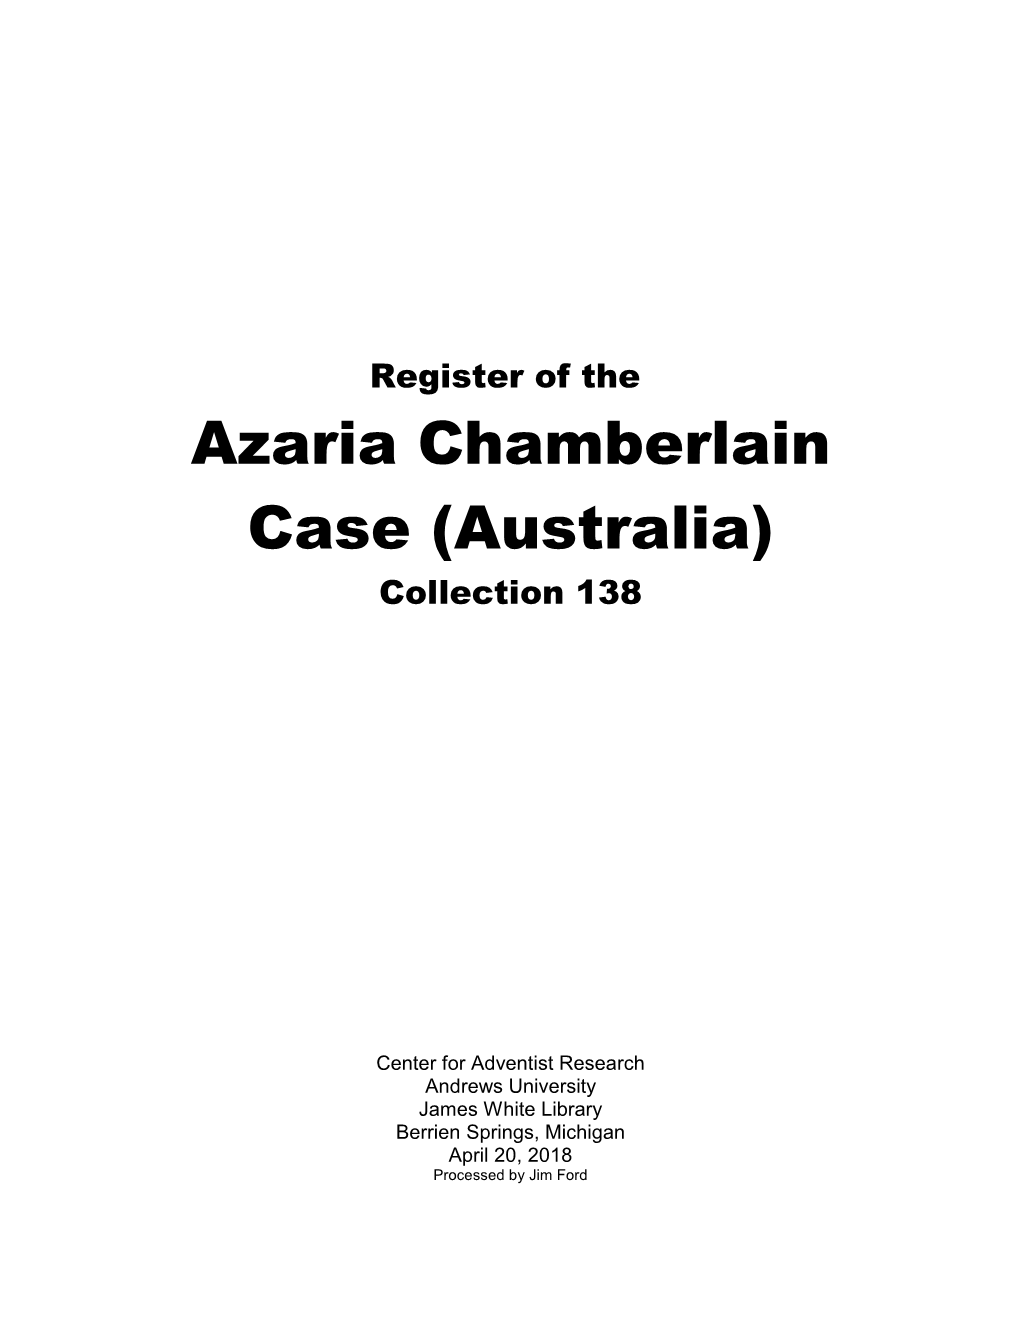 Azaria Chamberlain Case (Australia) Collection 138